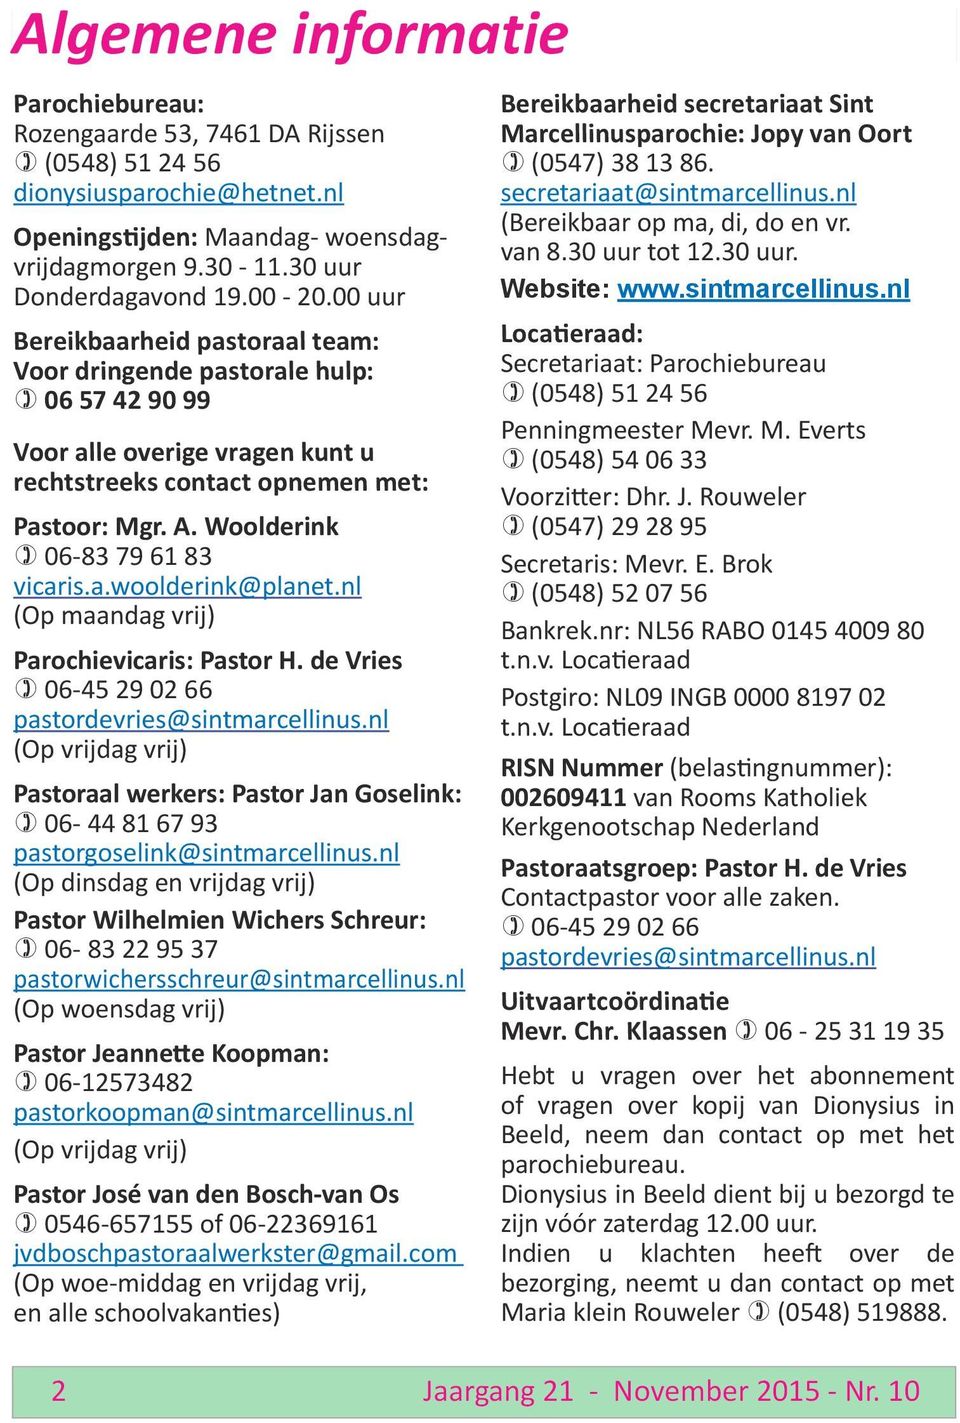 Woolderink ) 06-83 79 61 83 vicaris.a.woolderink@planet.nl (Op maandag vrij) Parochievicaris: Pastor H. de Vries ) 06-45 29 02 66 pastordevries@sintmarcellinus.